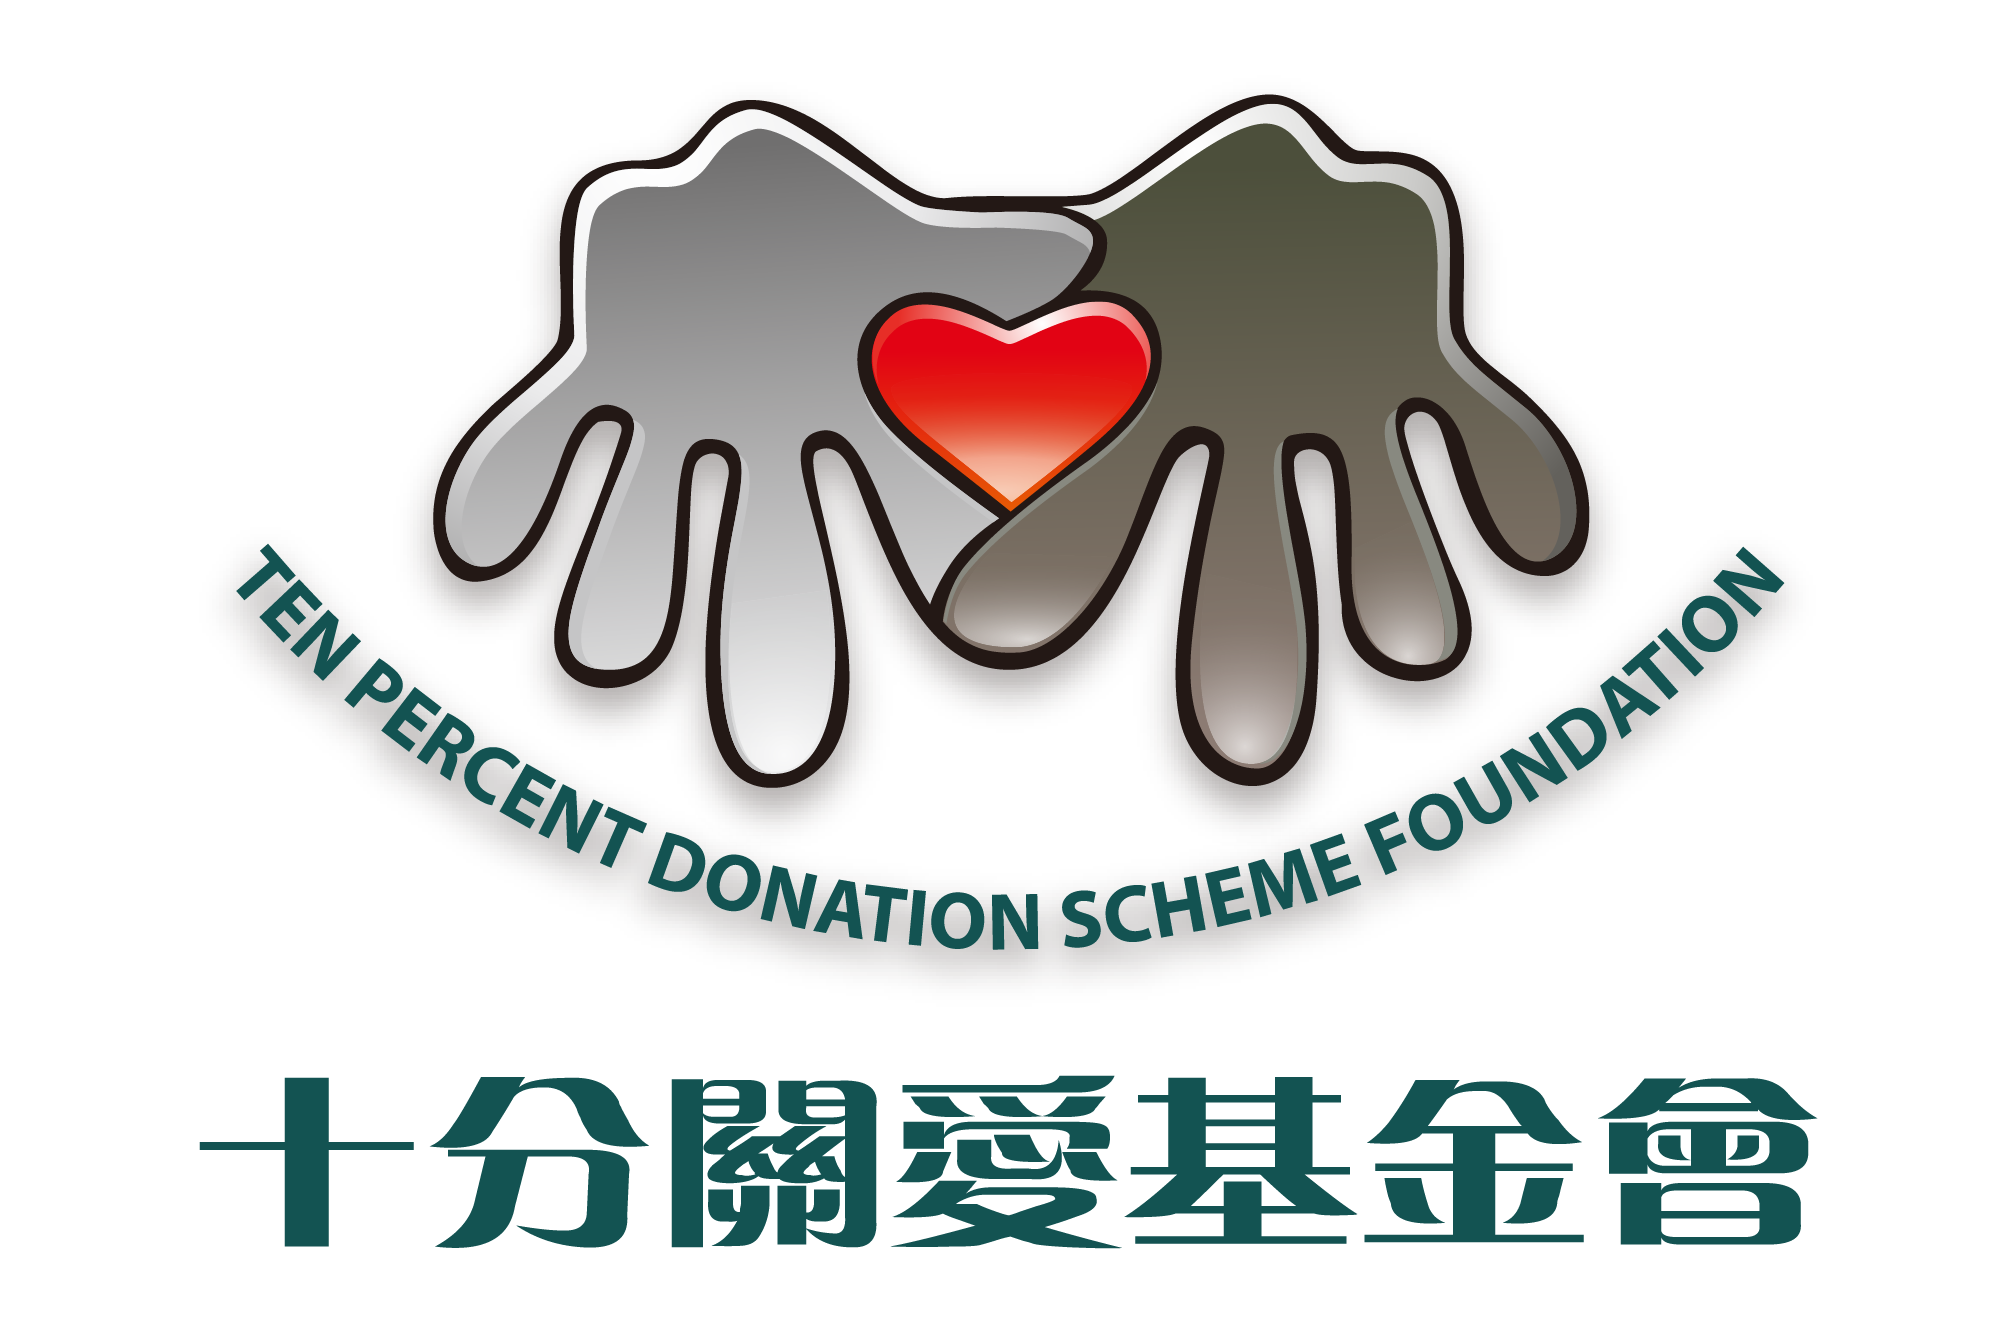 心繫心生命教育基金有限公司 Heart-to-Heart Life Education Foundation Limited  